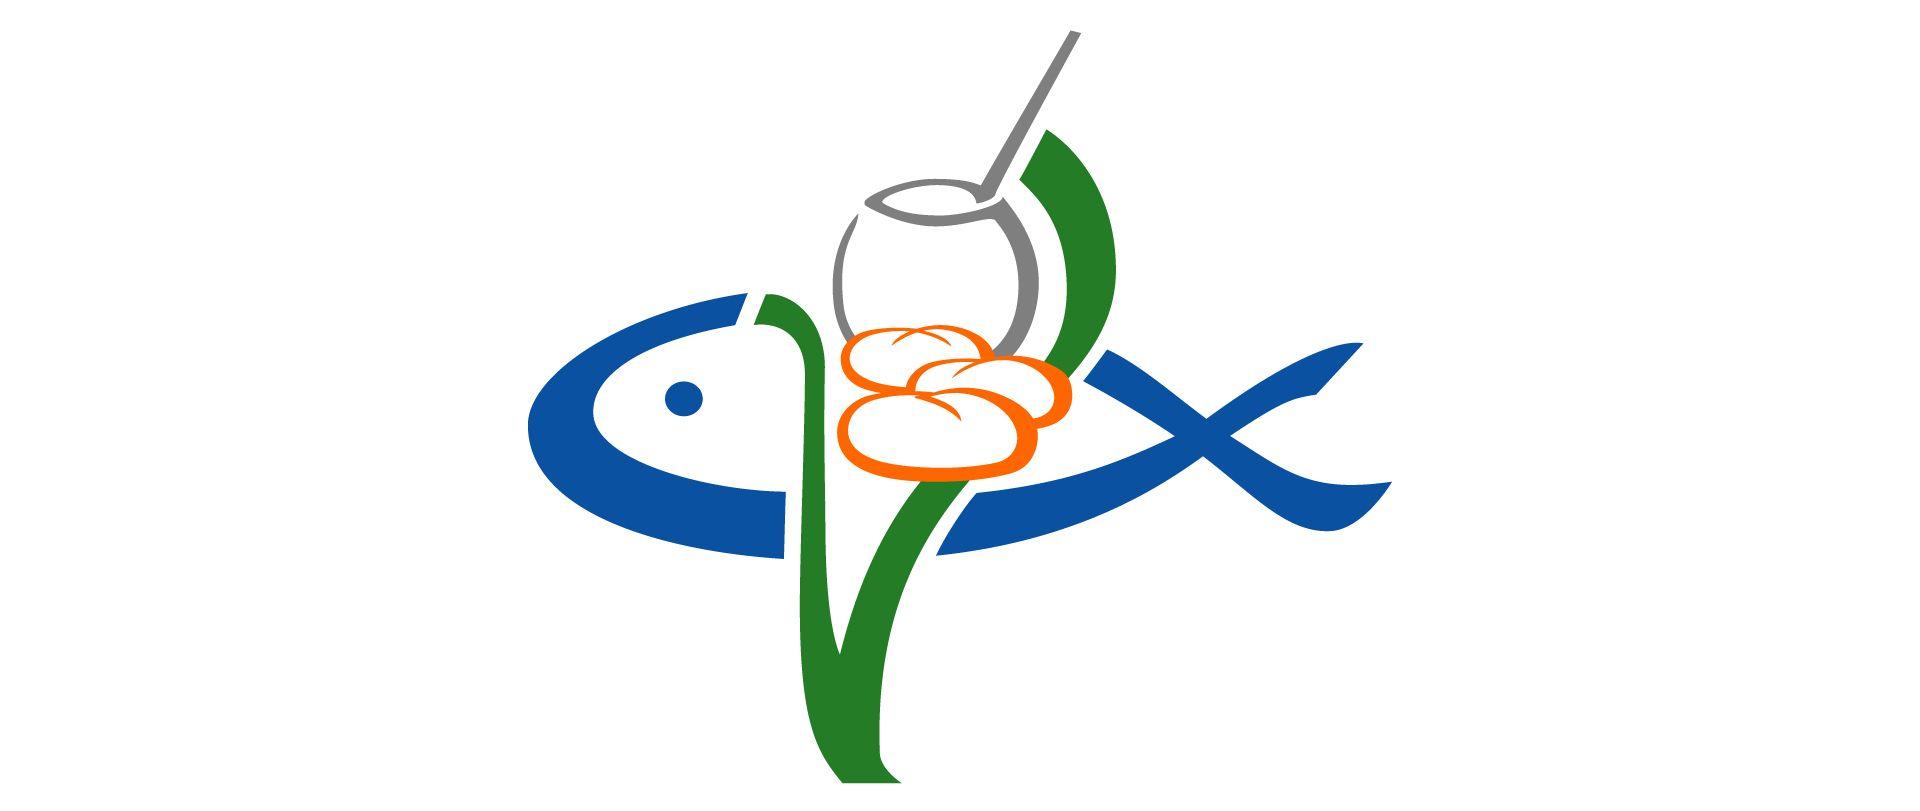 CVX Logo - The Narrative behind the Logo of the XVII CLC World Assembly – XVII ...